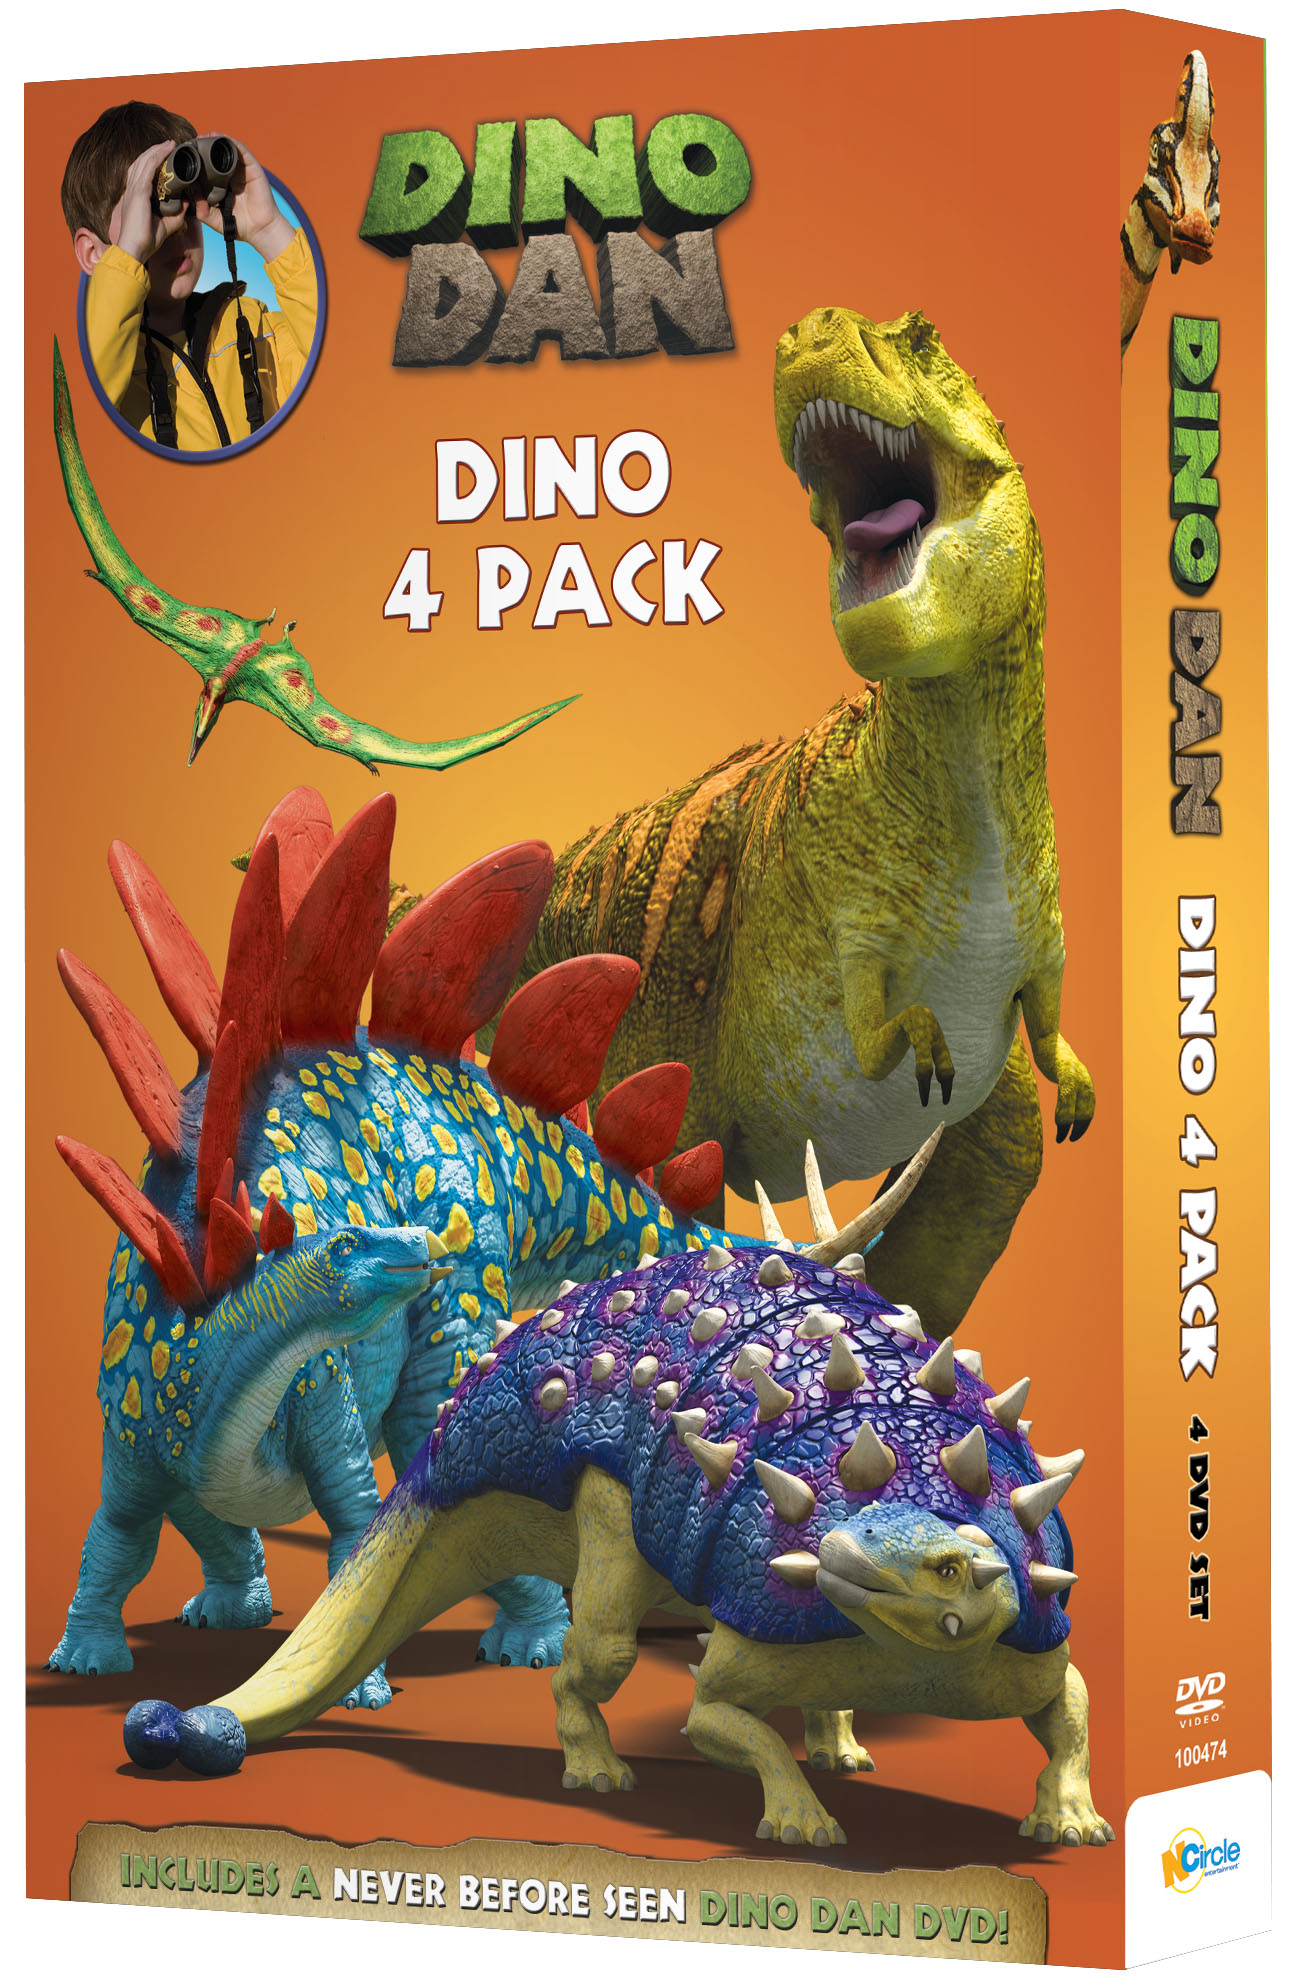 Dino Dan' Dino DVD 4 Pack Review